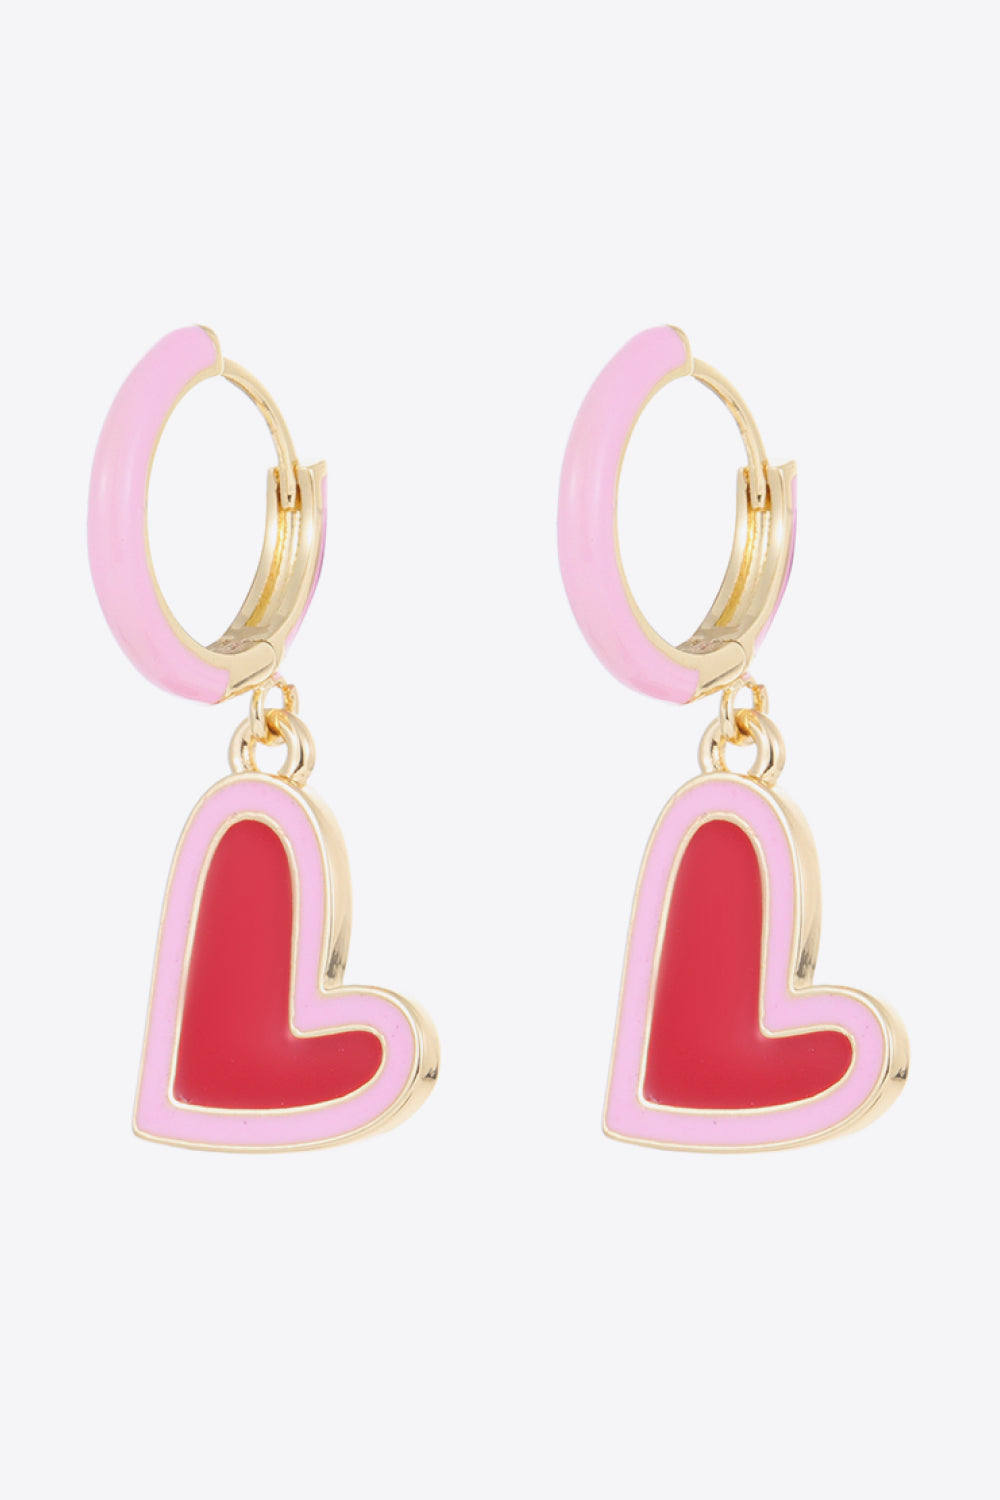 5-Pair Wholesale Contrast Heart-Shaped Drop Earrings